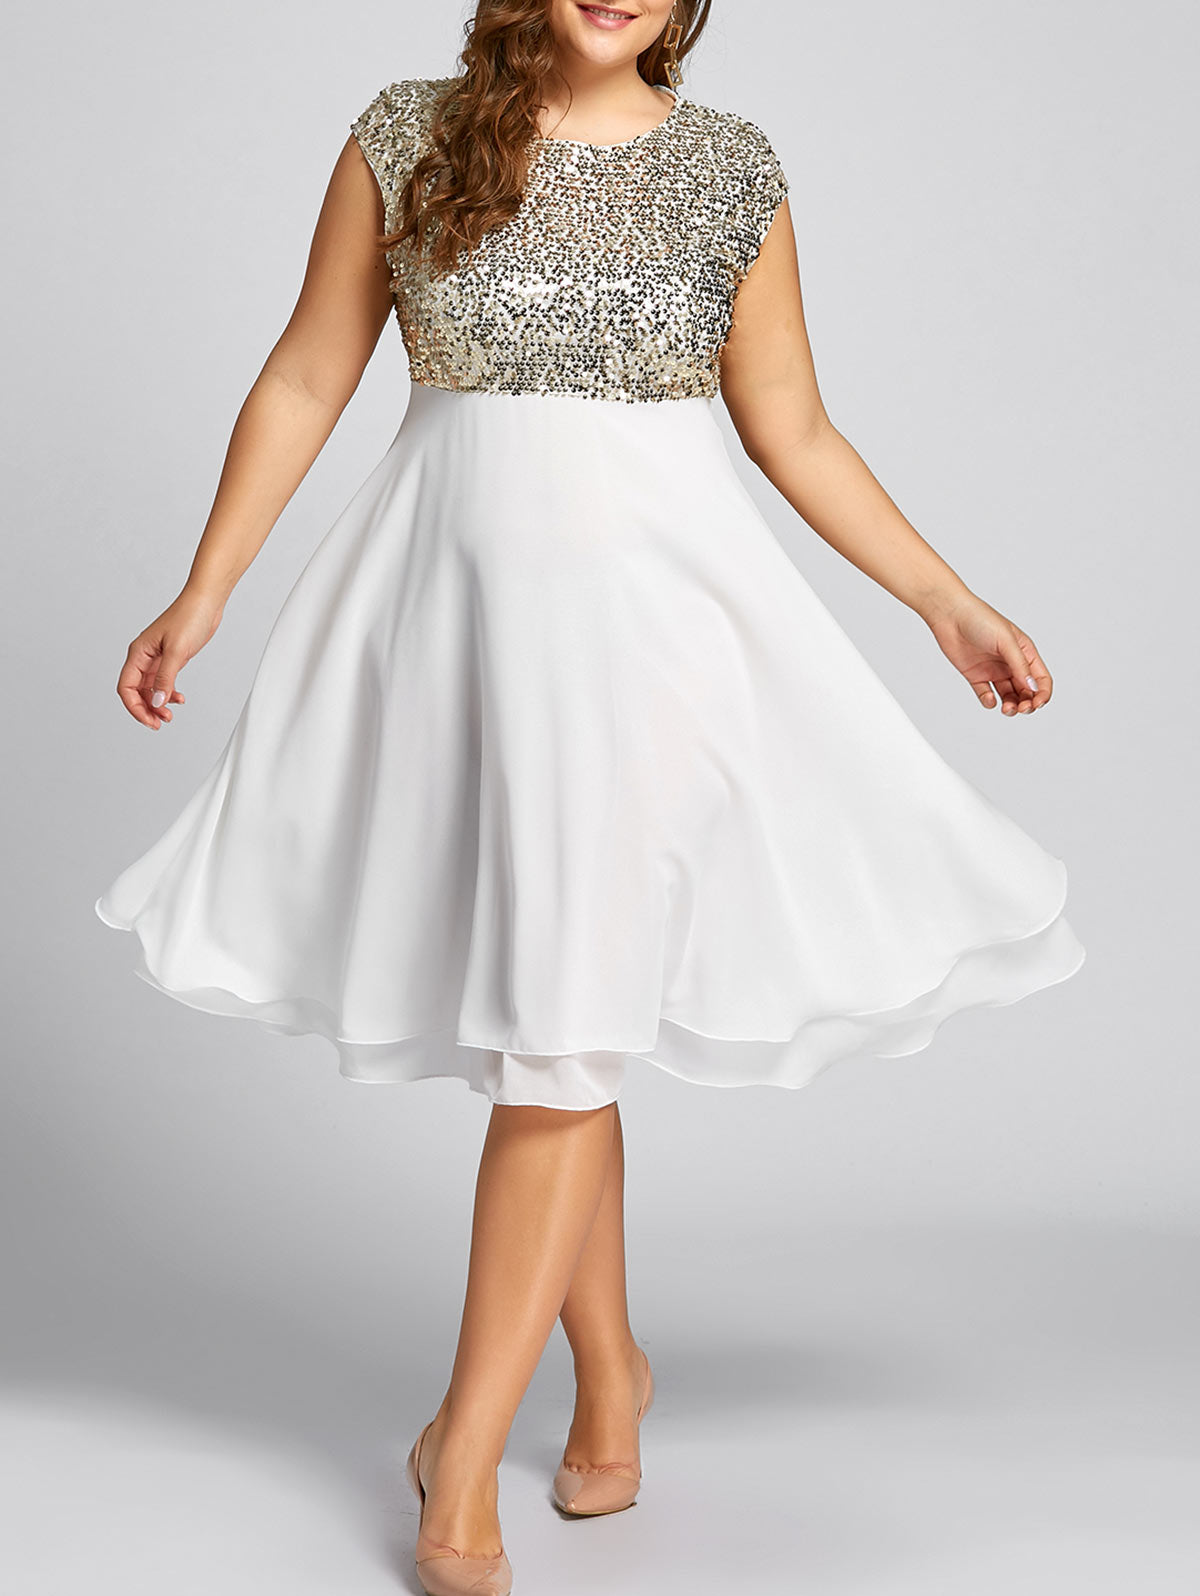 sparkly dresses